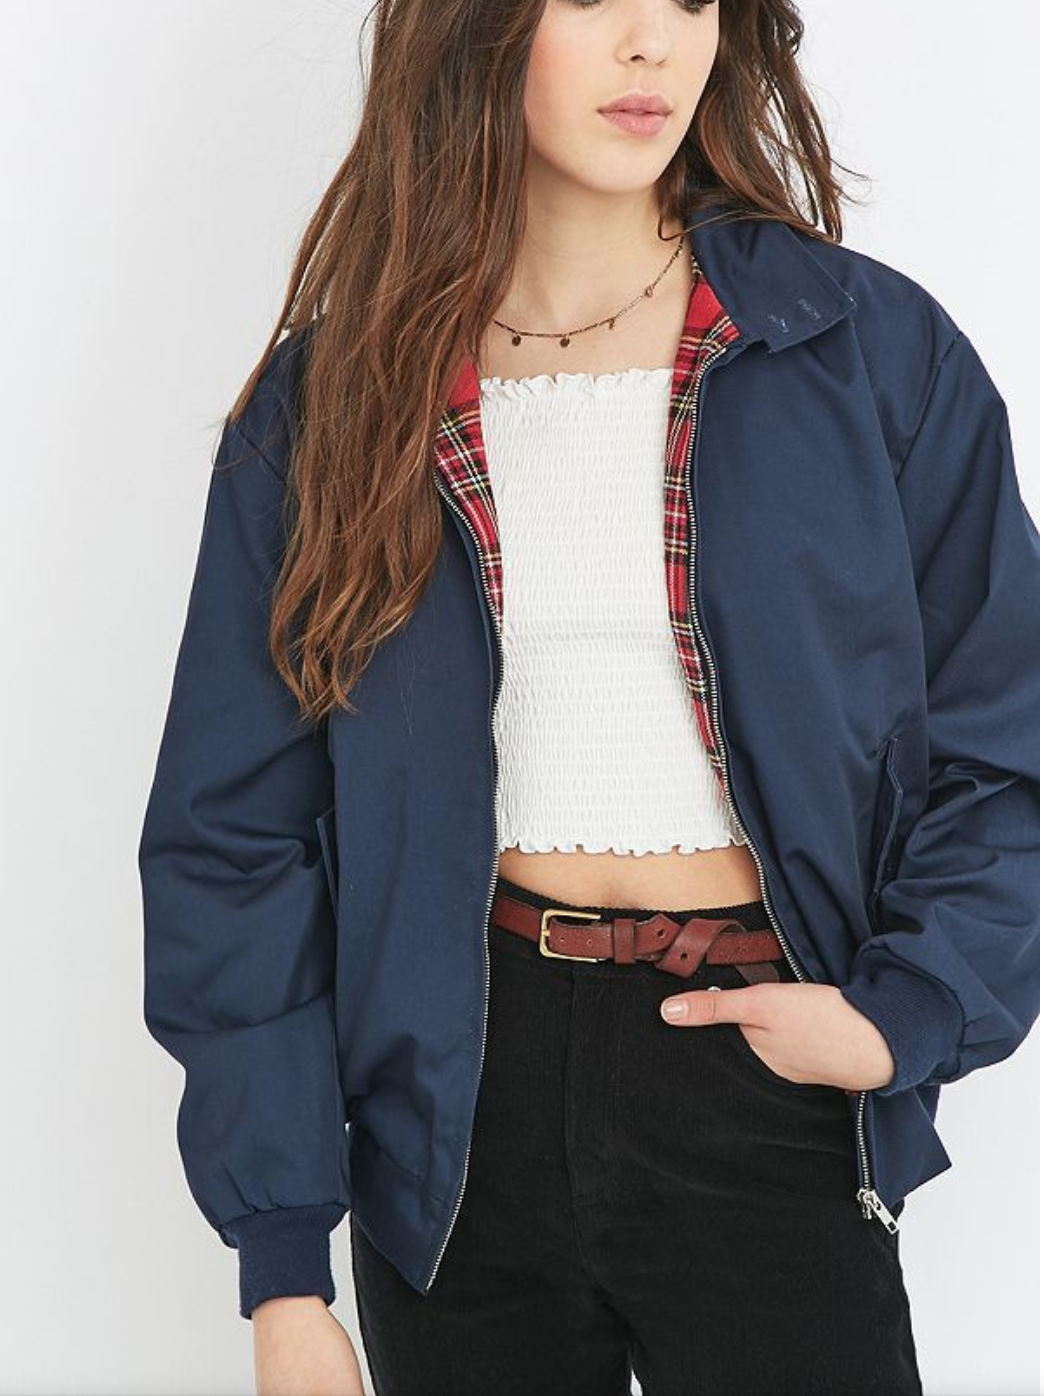 Harrington Jacket Outfit Ideas
  for Women